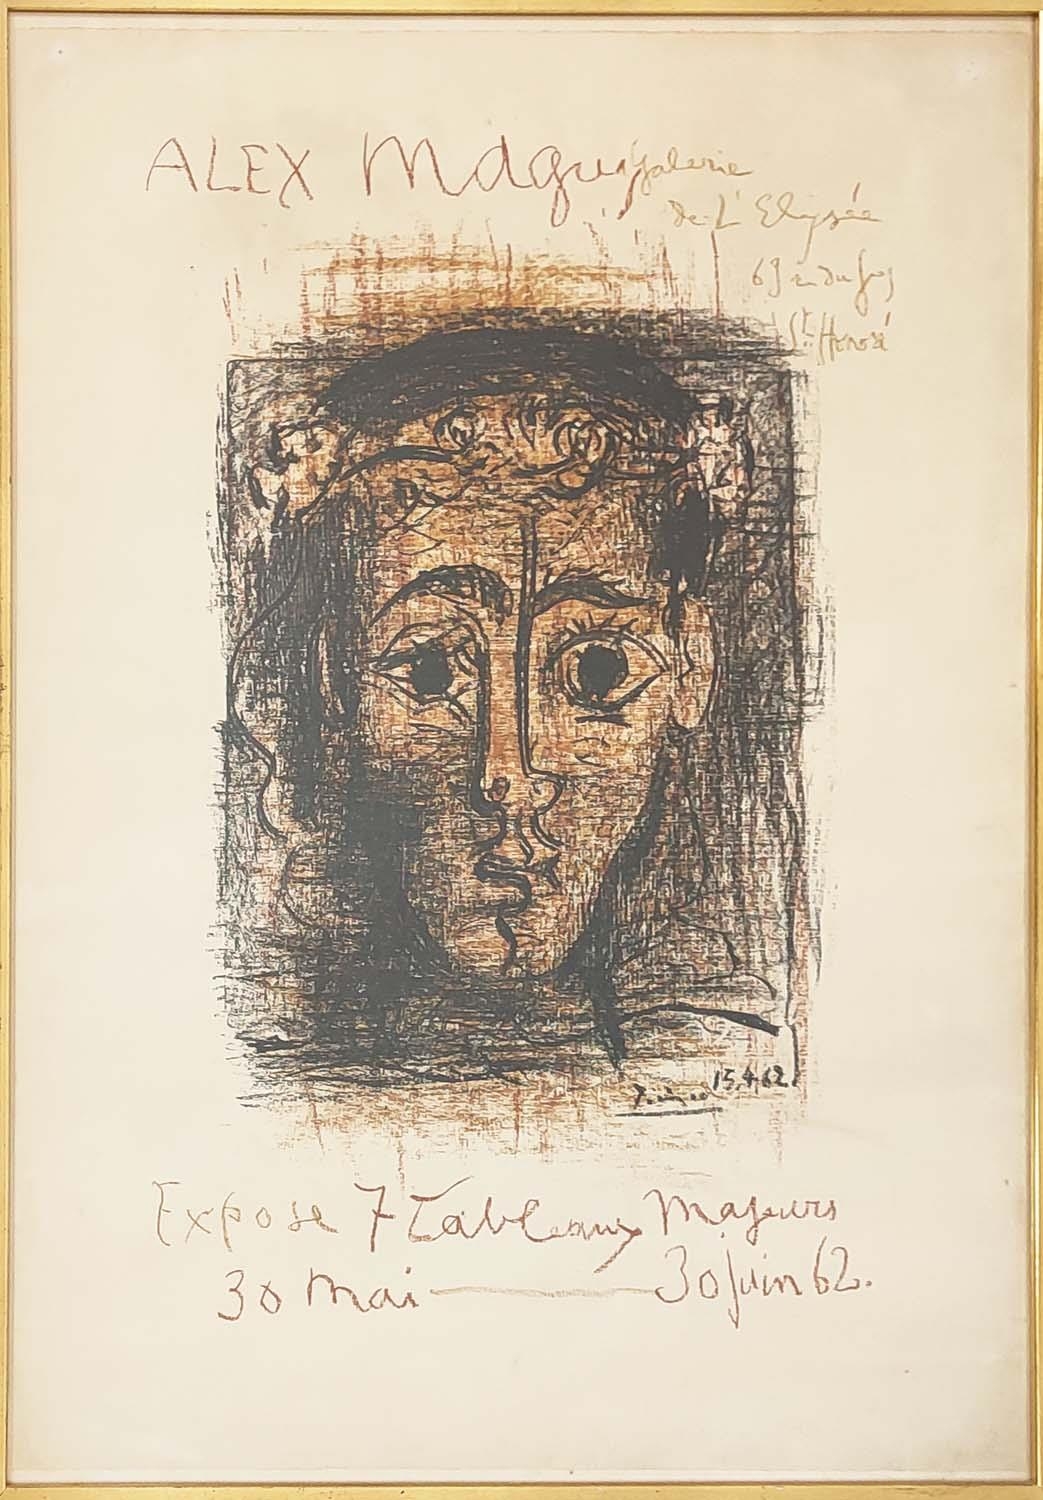 PABLO PICASSO (1881-1973) 'Alex Maguy, Galerie de l'Elysee Paris 1962', lithographic poster in